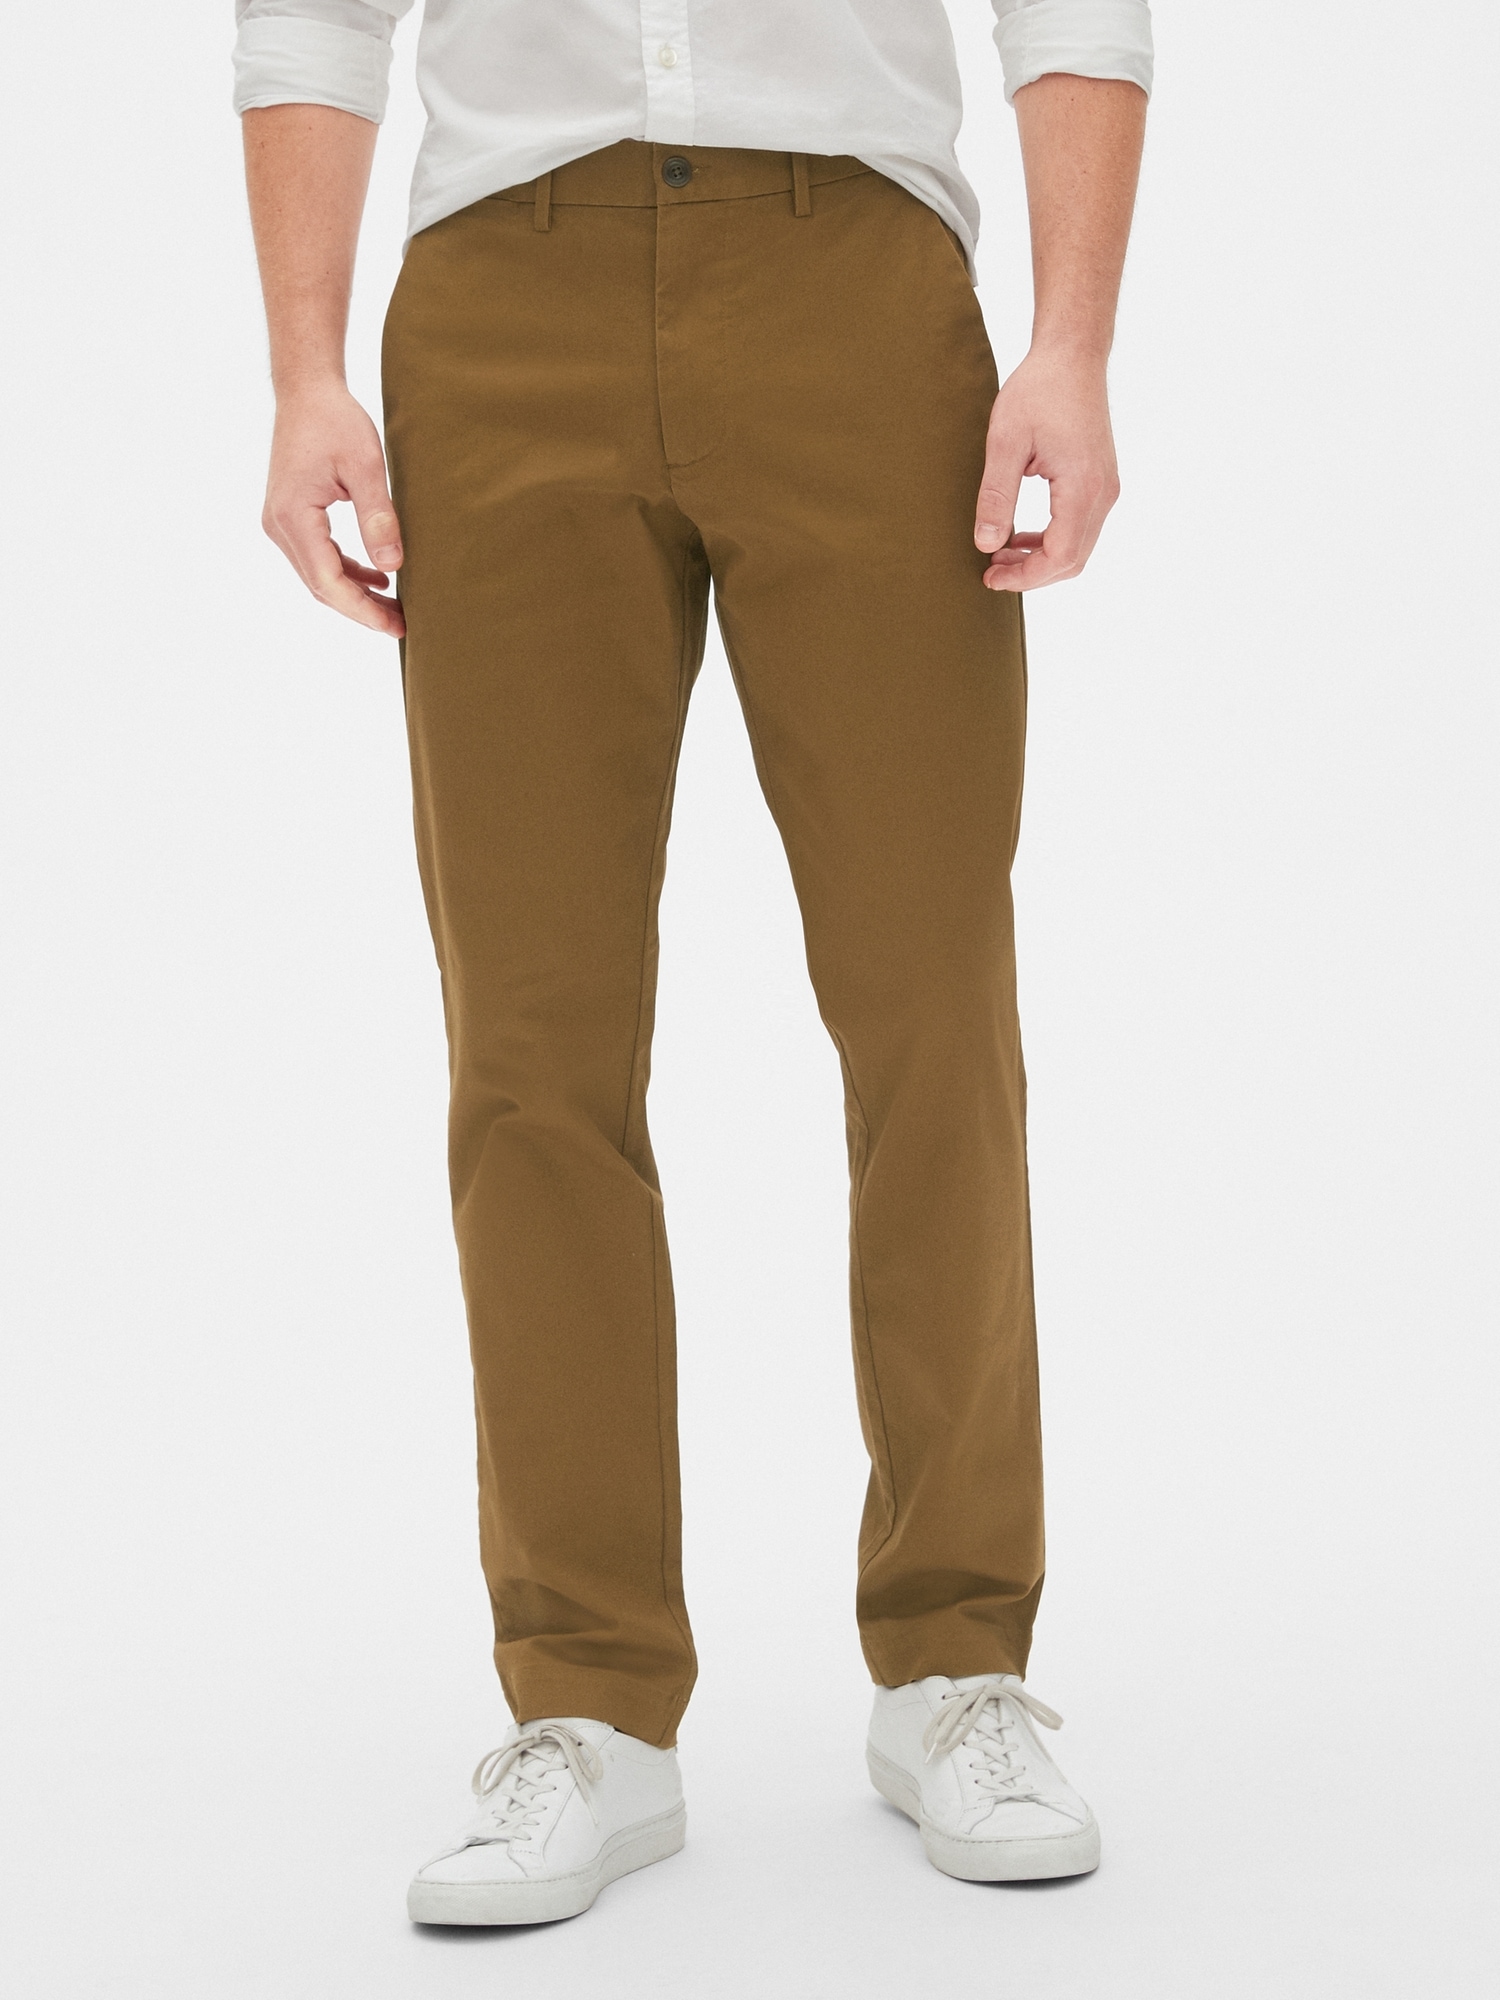 Color Khakis In Slim Fit With Gapflex - FitnessRetro